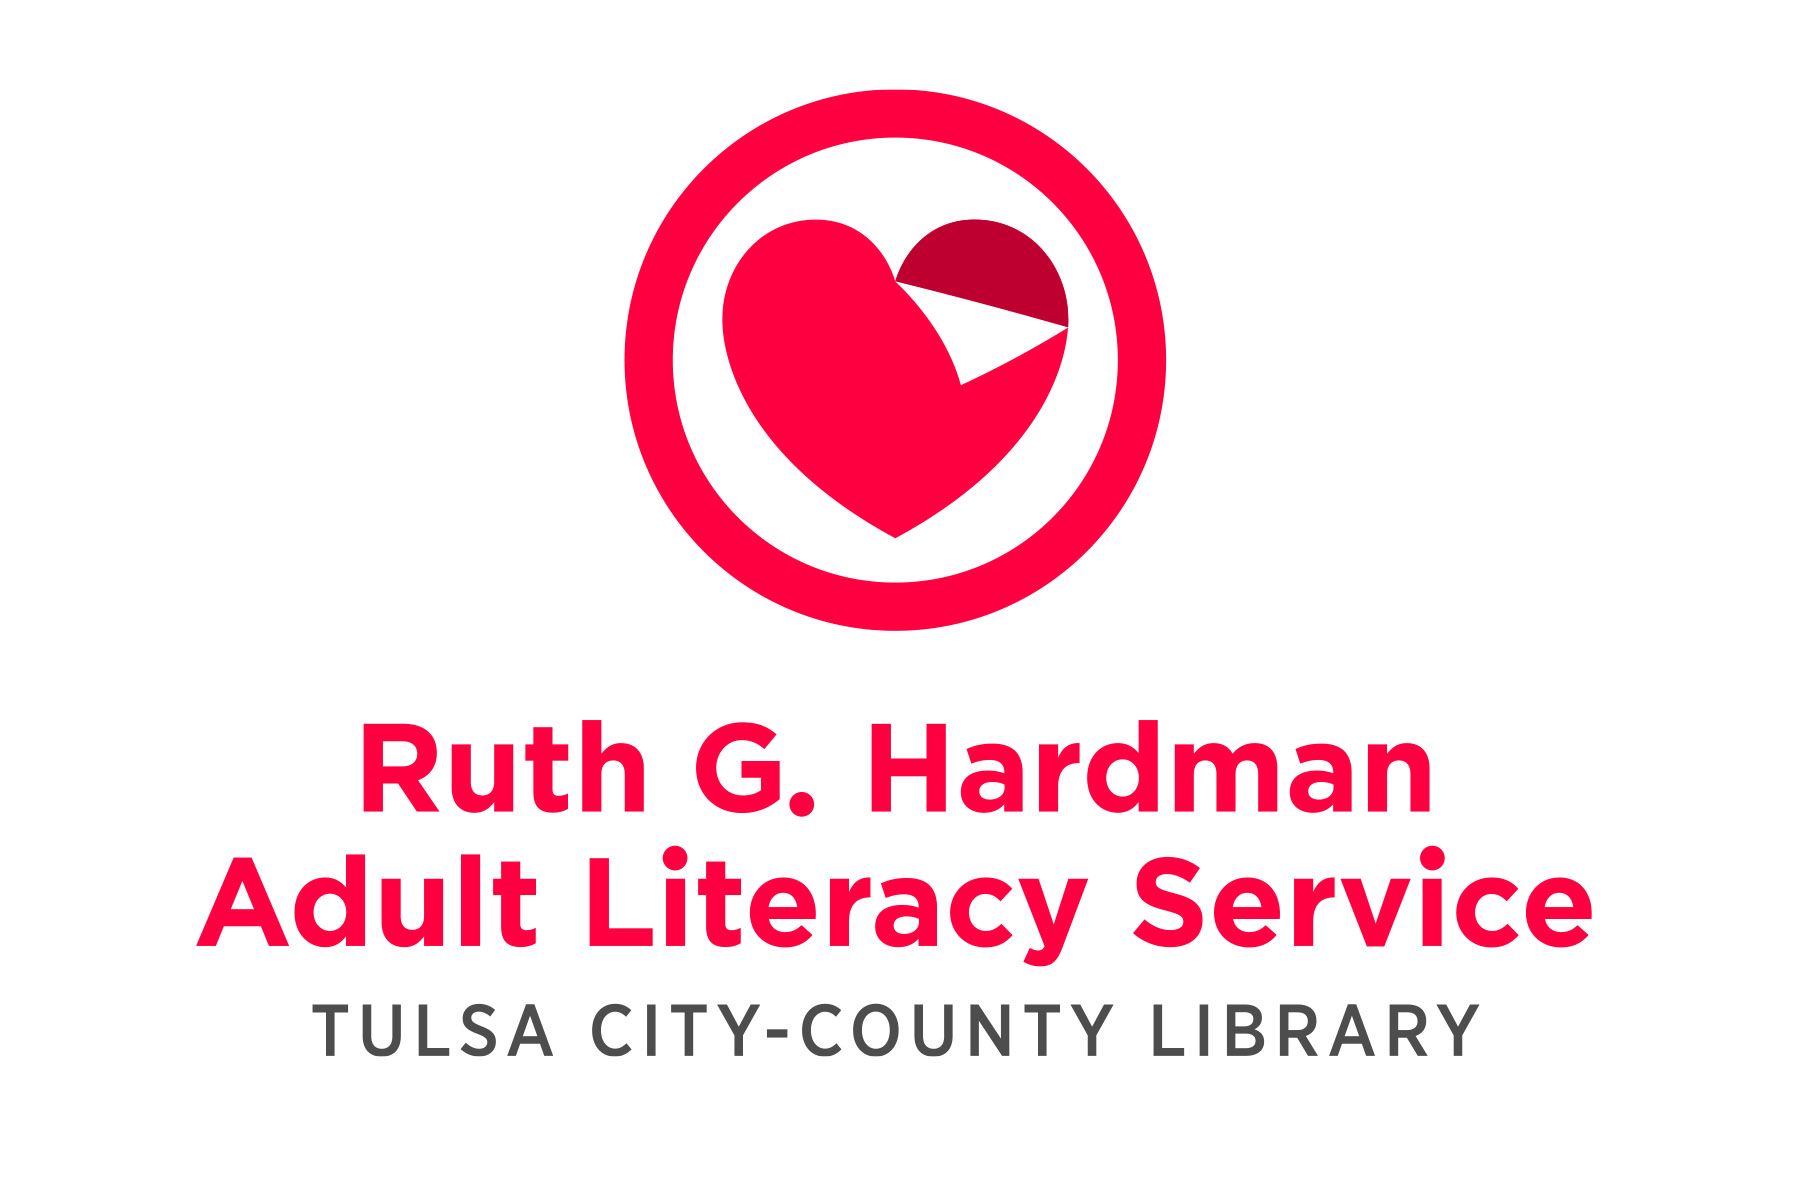 Ruth G. Hardman Adult Literacy Services logo